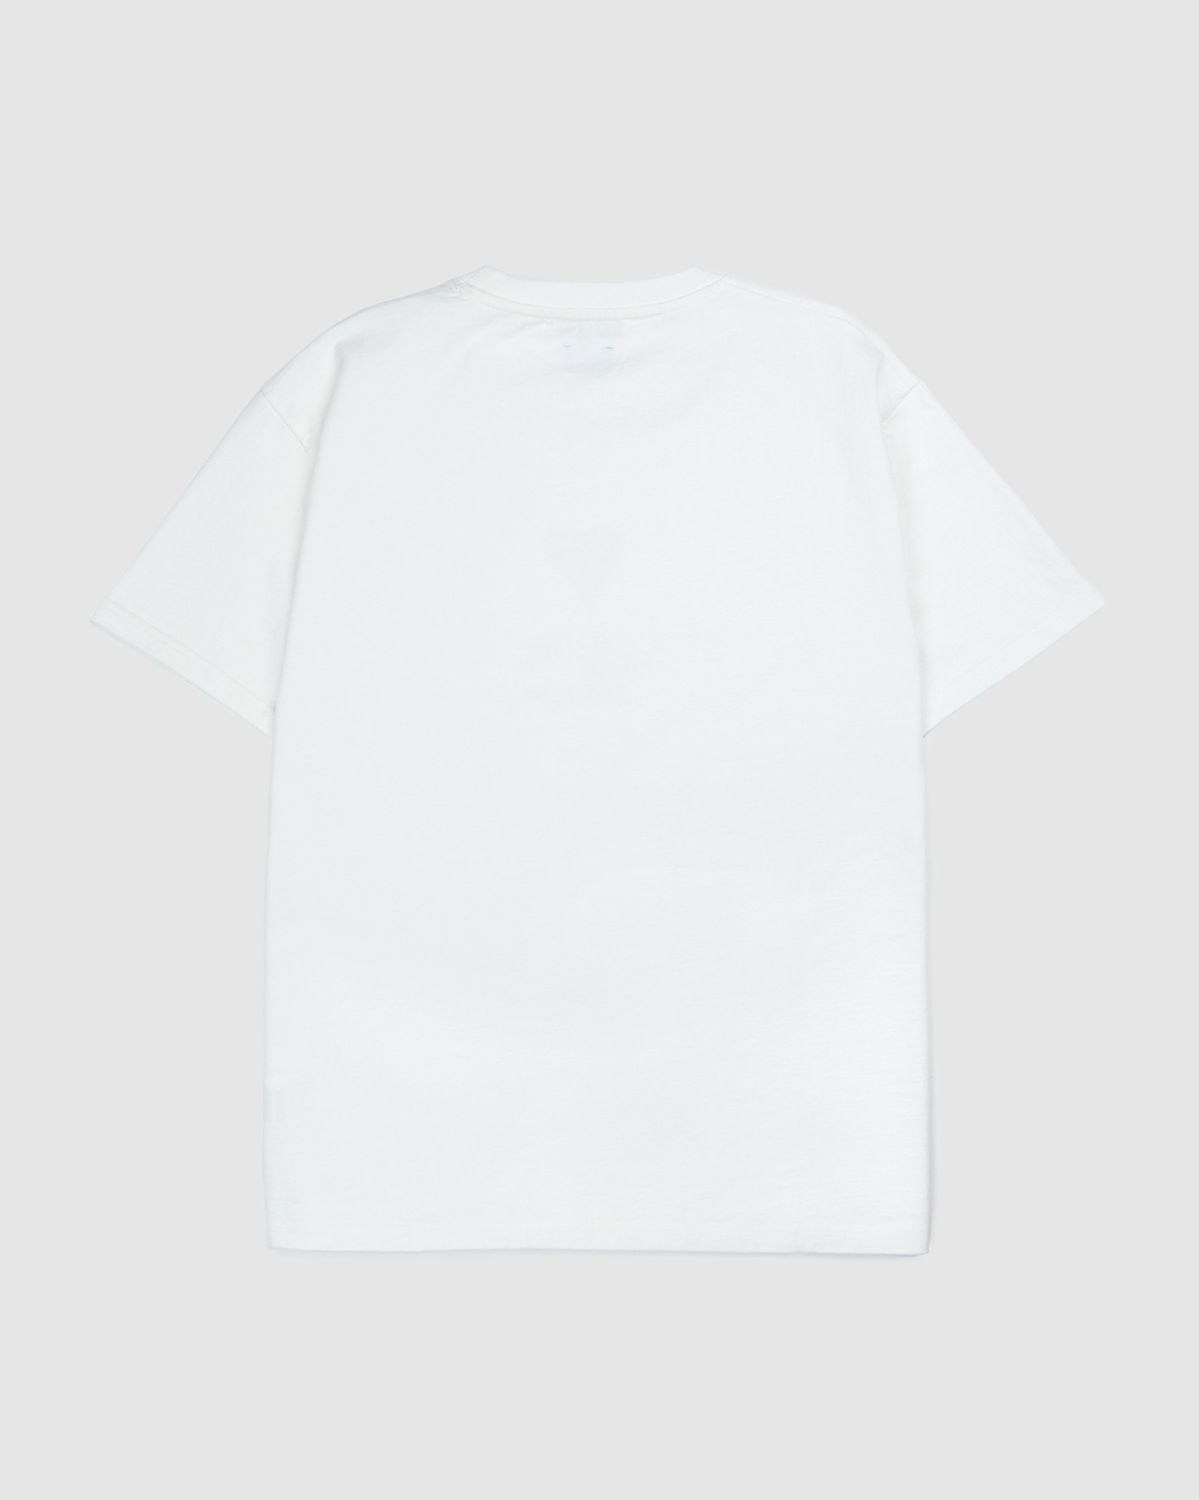 Colette Mon Amour – Heart T-Shirt White - T-shirts - White - Image 2